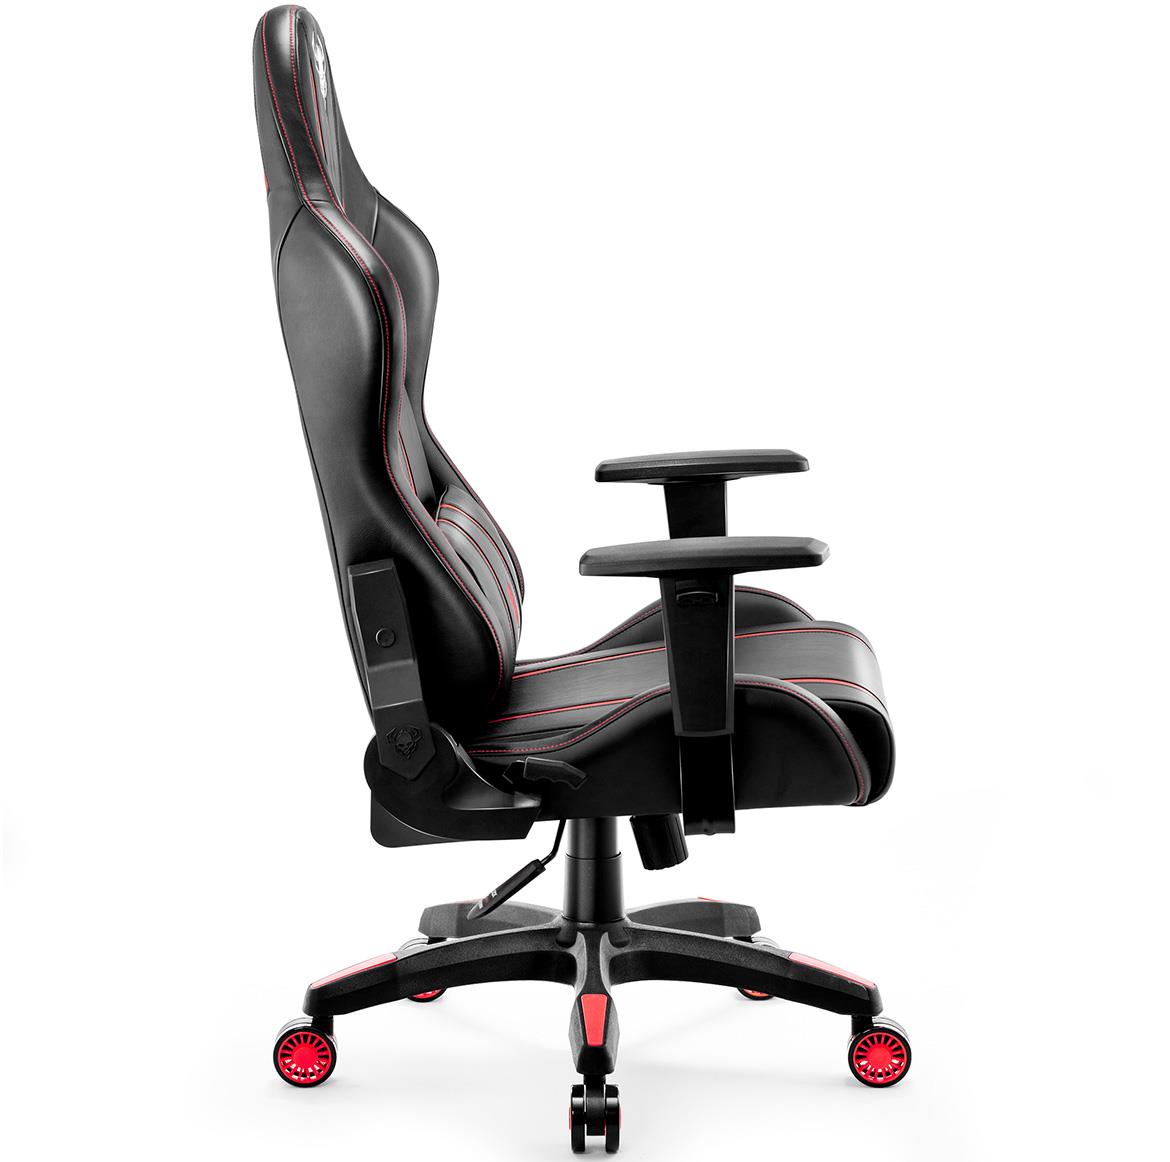 King Diablo X-One 2.0 kancelarijska stolica 72x54x134 cm crno crvena